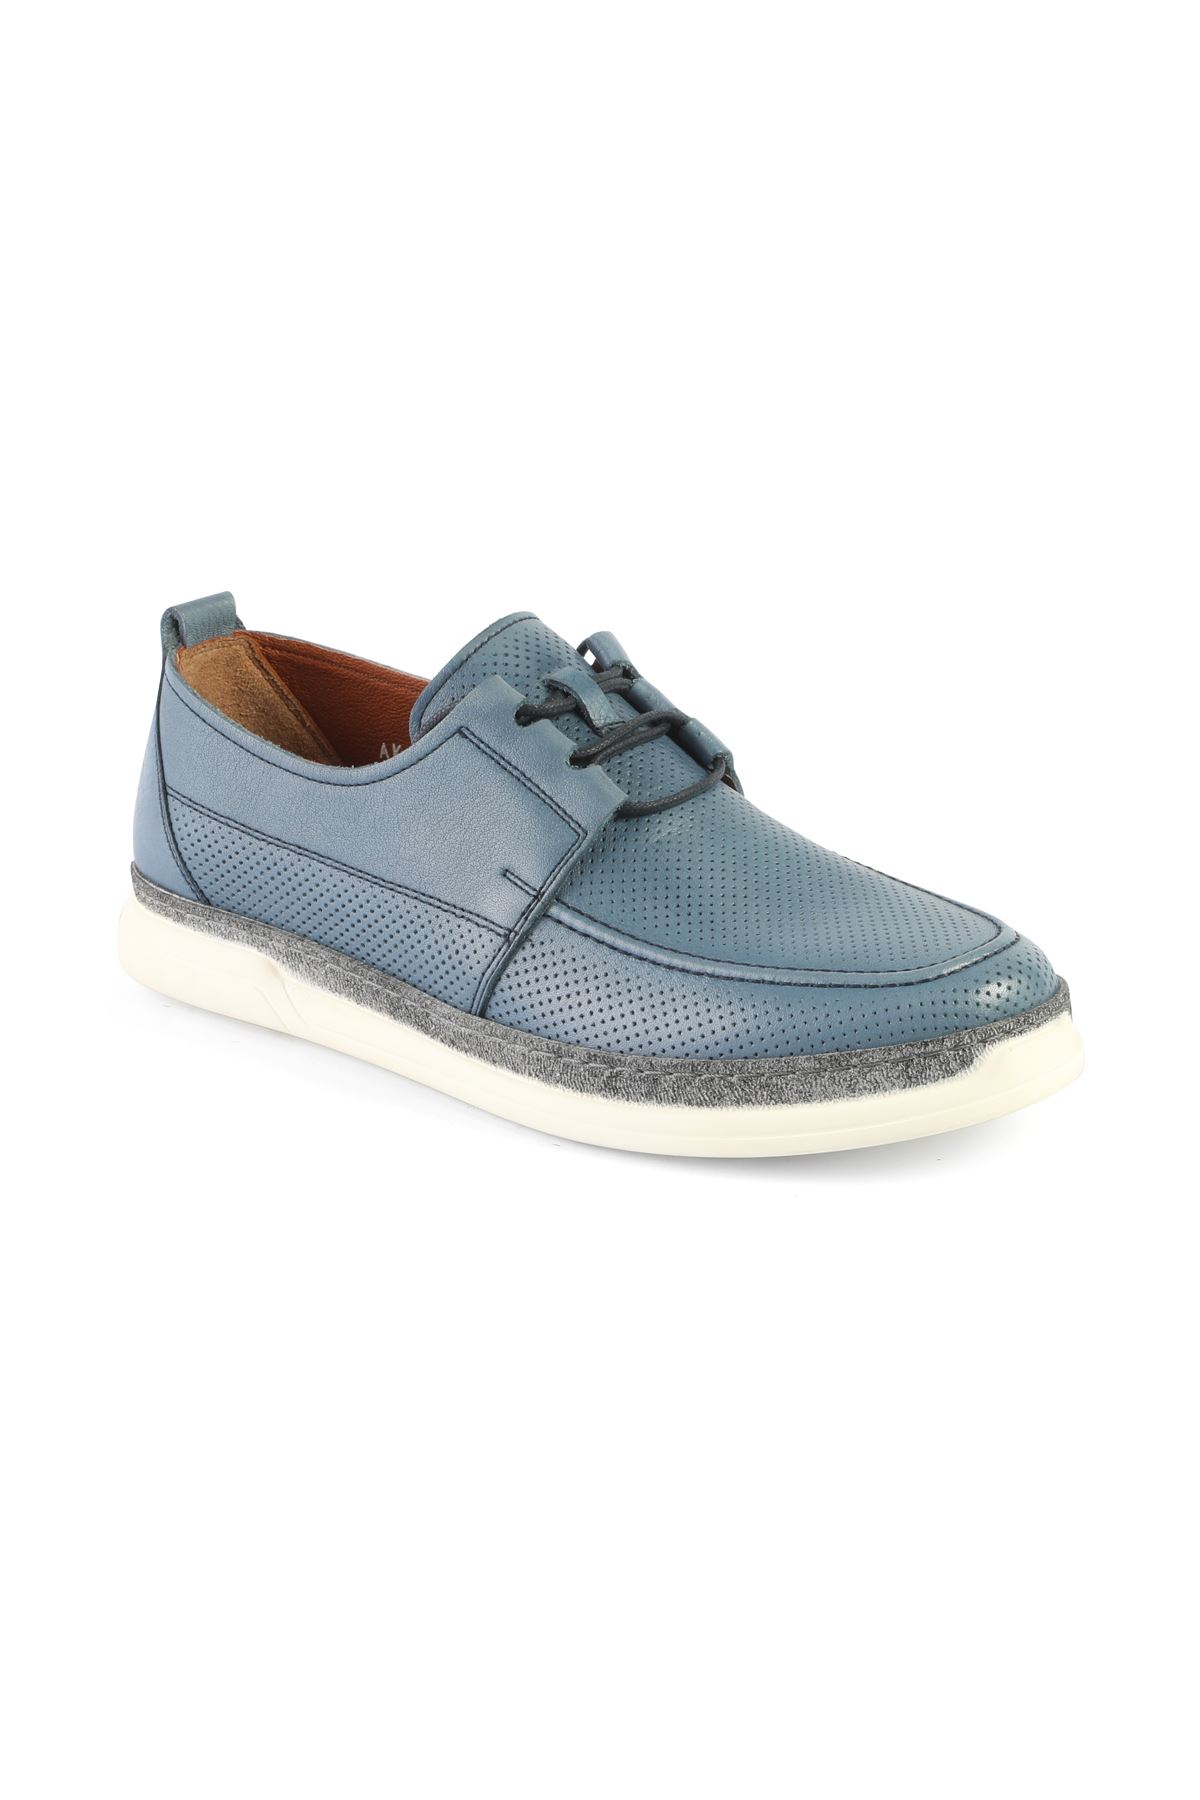 Libero L3418 Blue Loafer Shoes